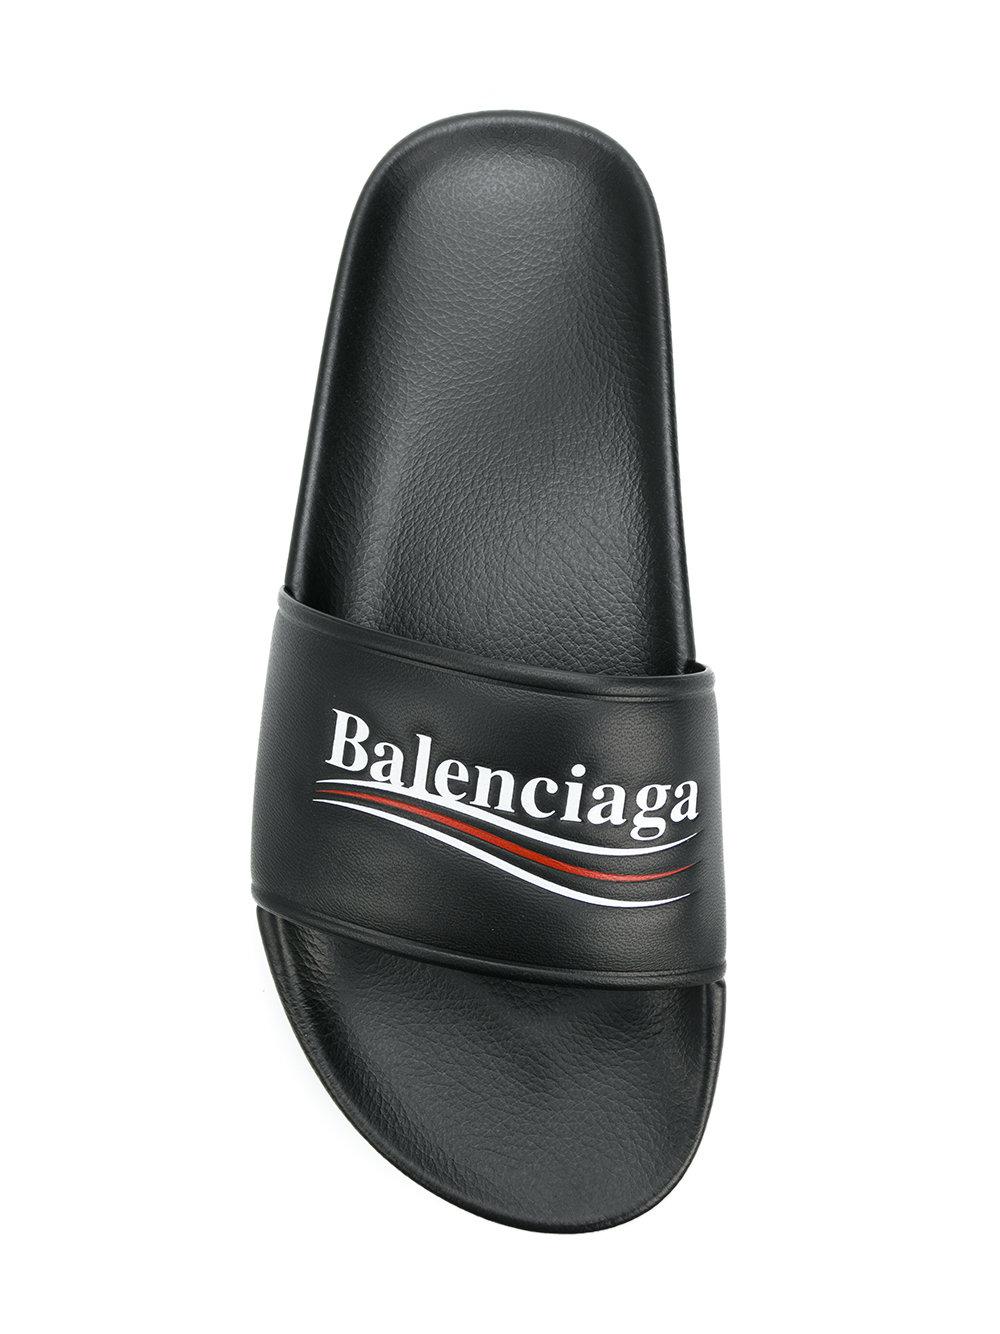 Balenciaga Leather Branded Pool Slides in Black - Lyst